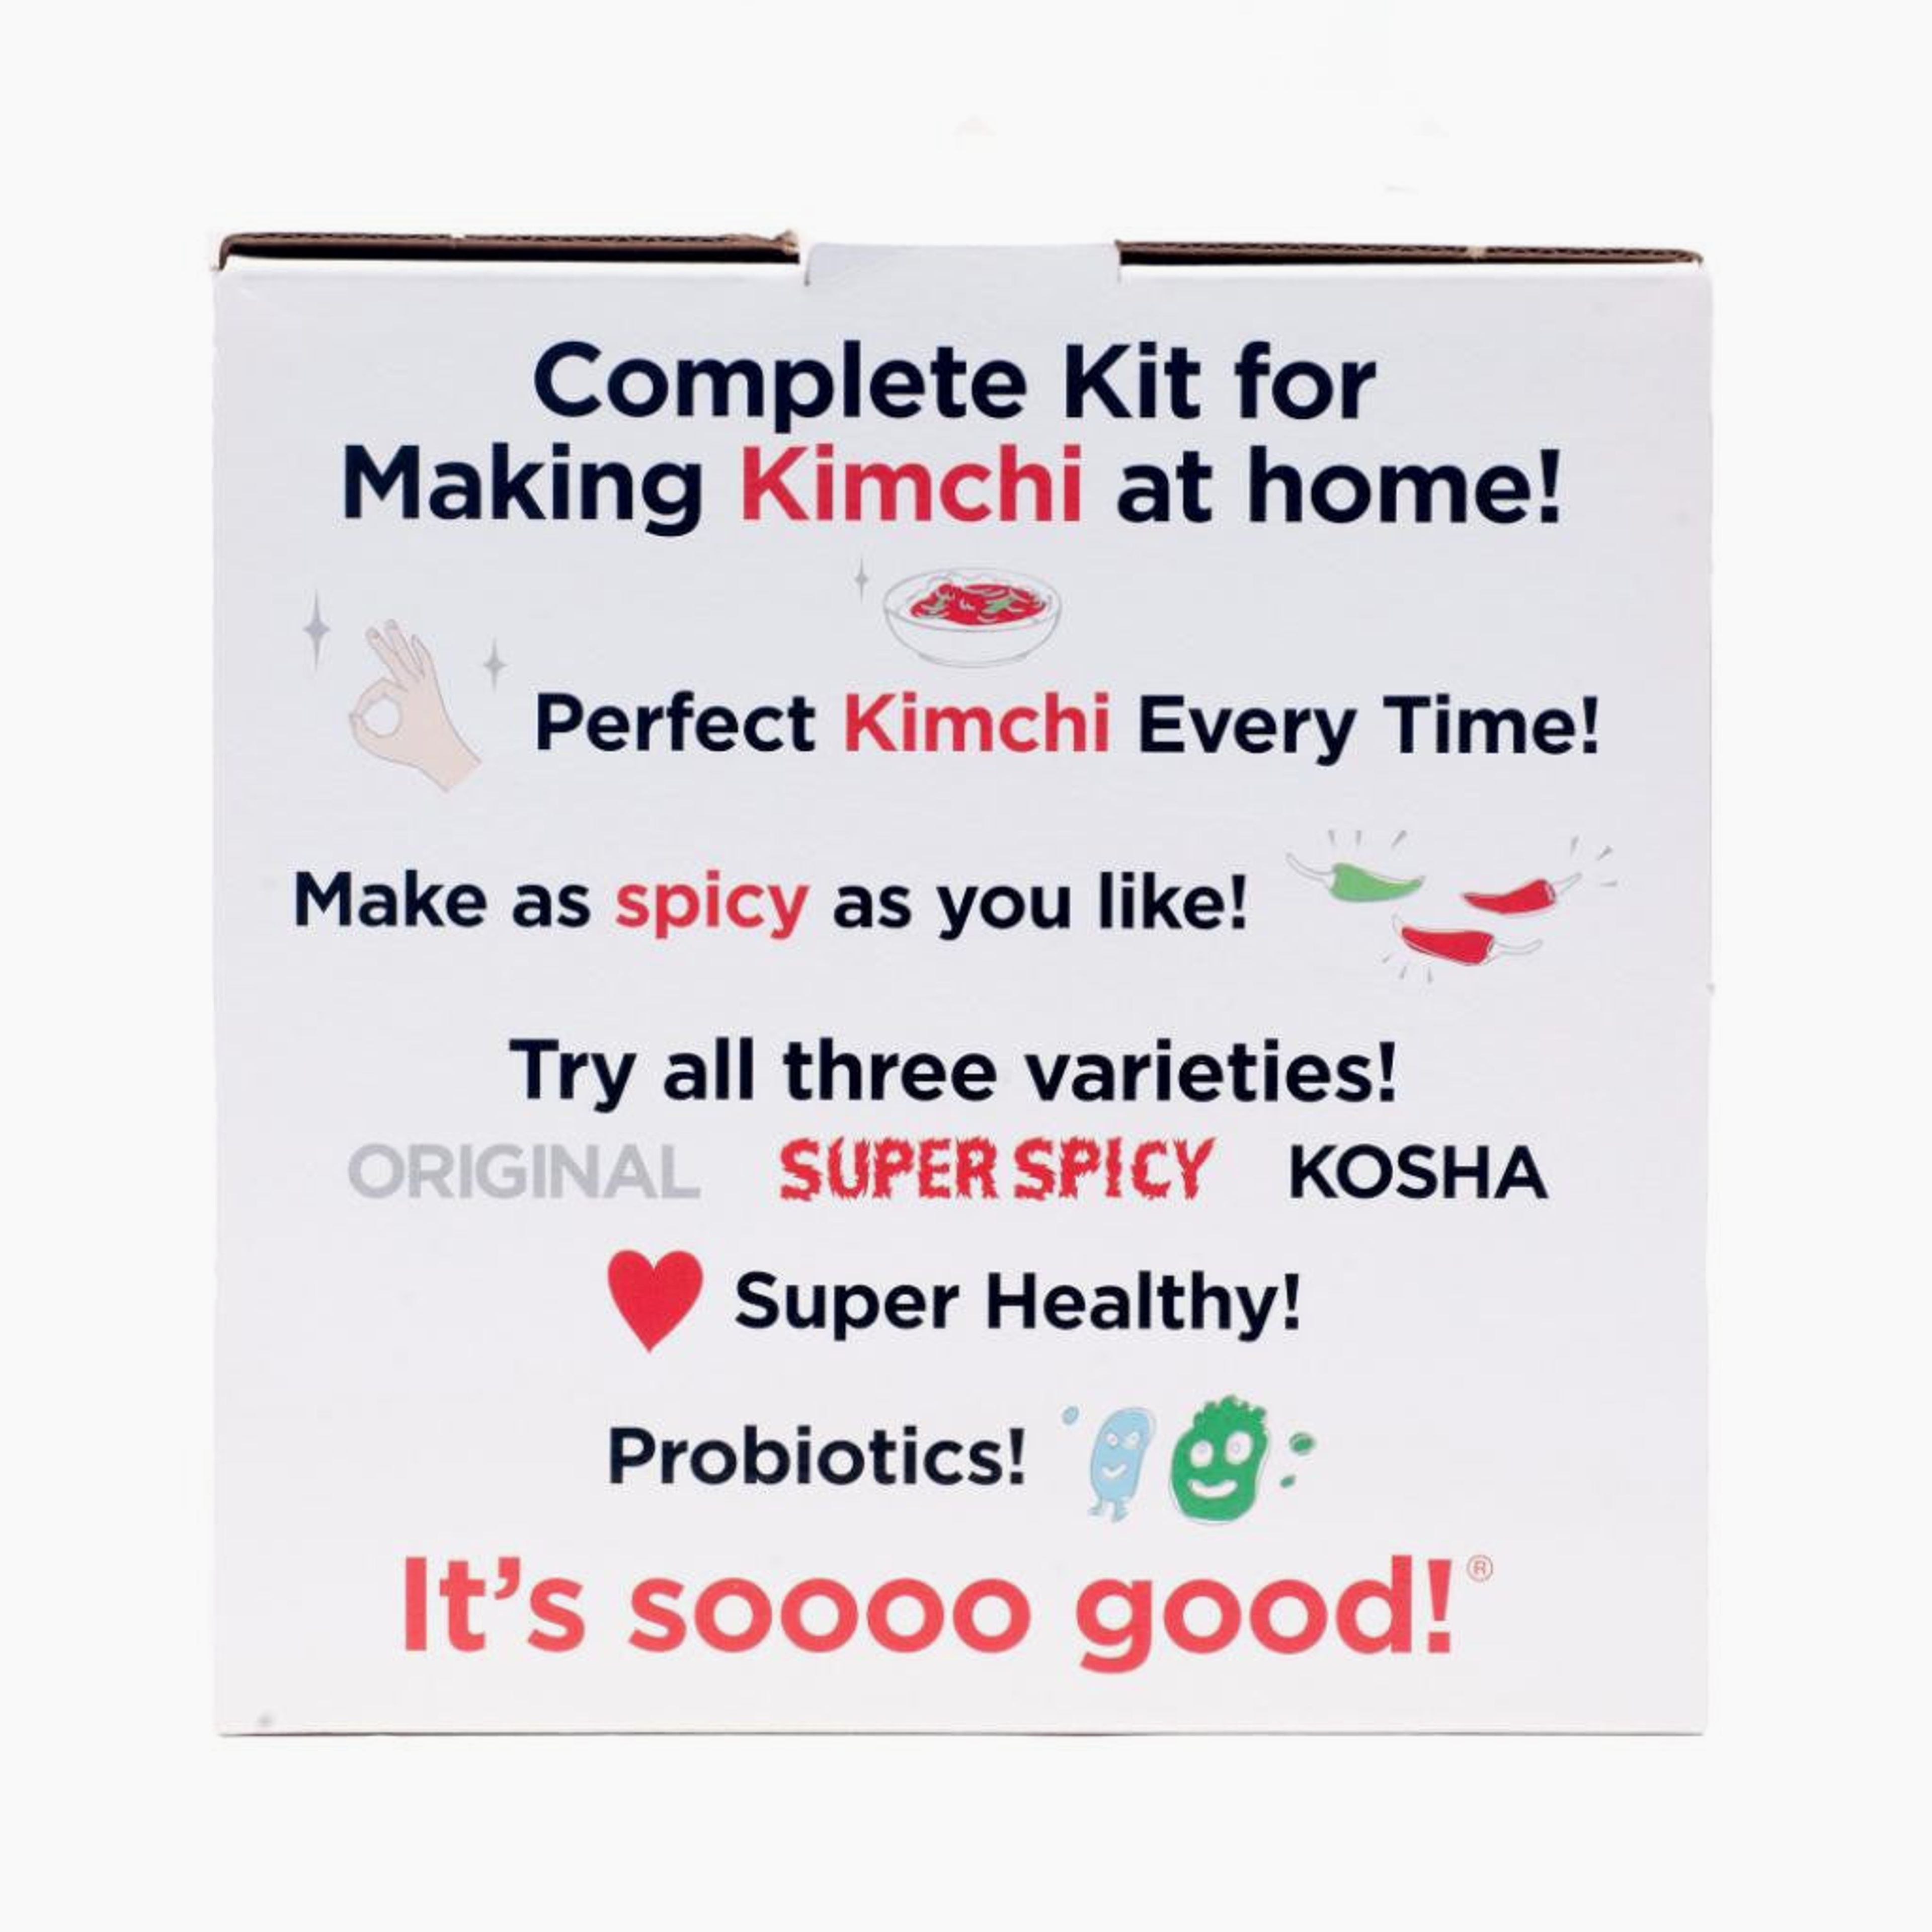 Mama O's Premium Homemade Kimchi Kit